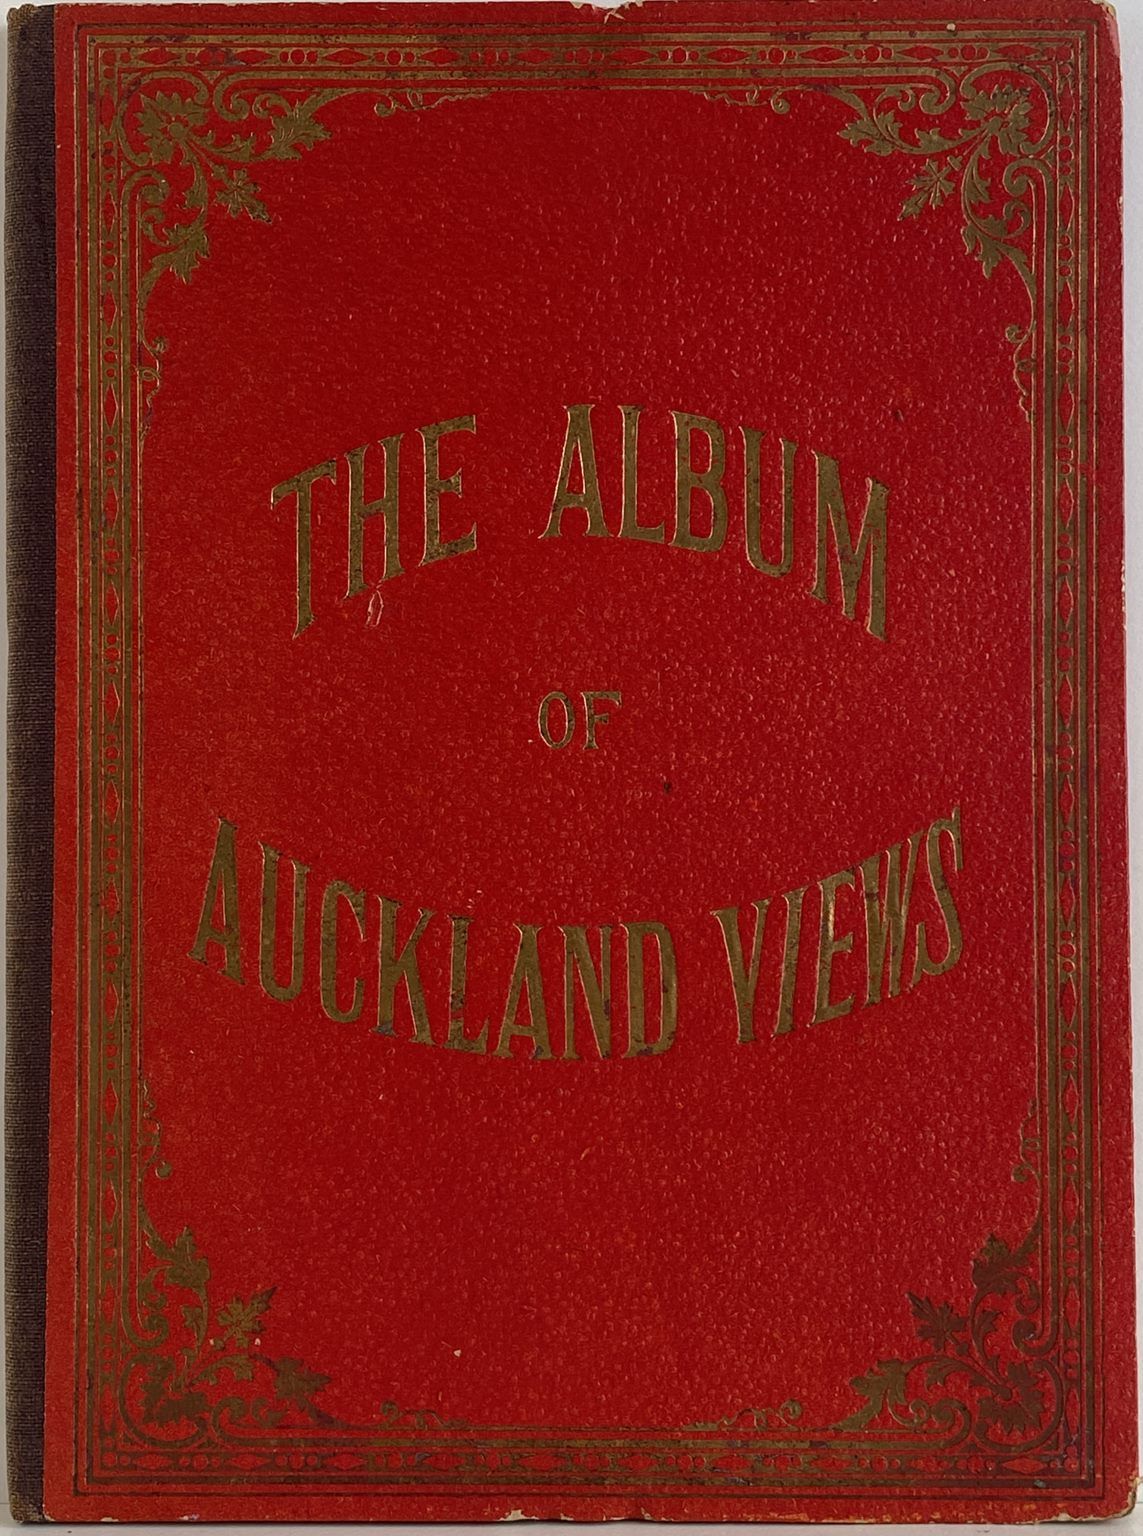 THE ALBUM of AUCKLAND VIEWS